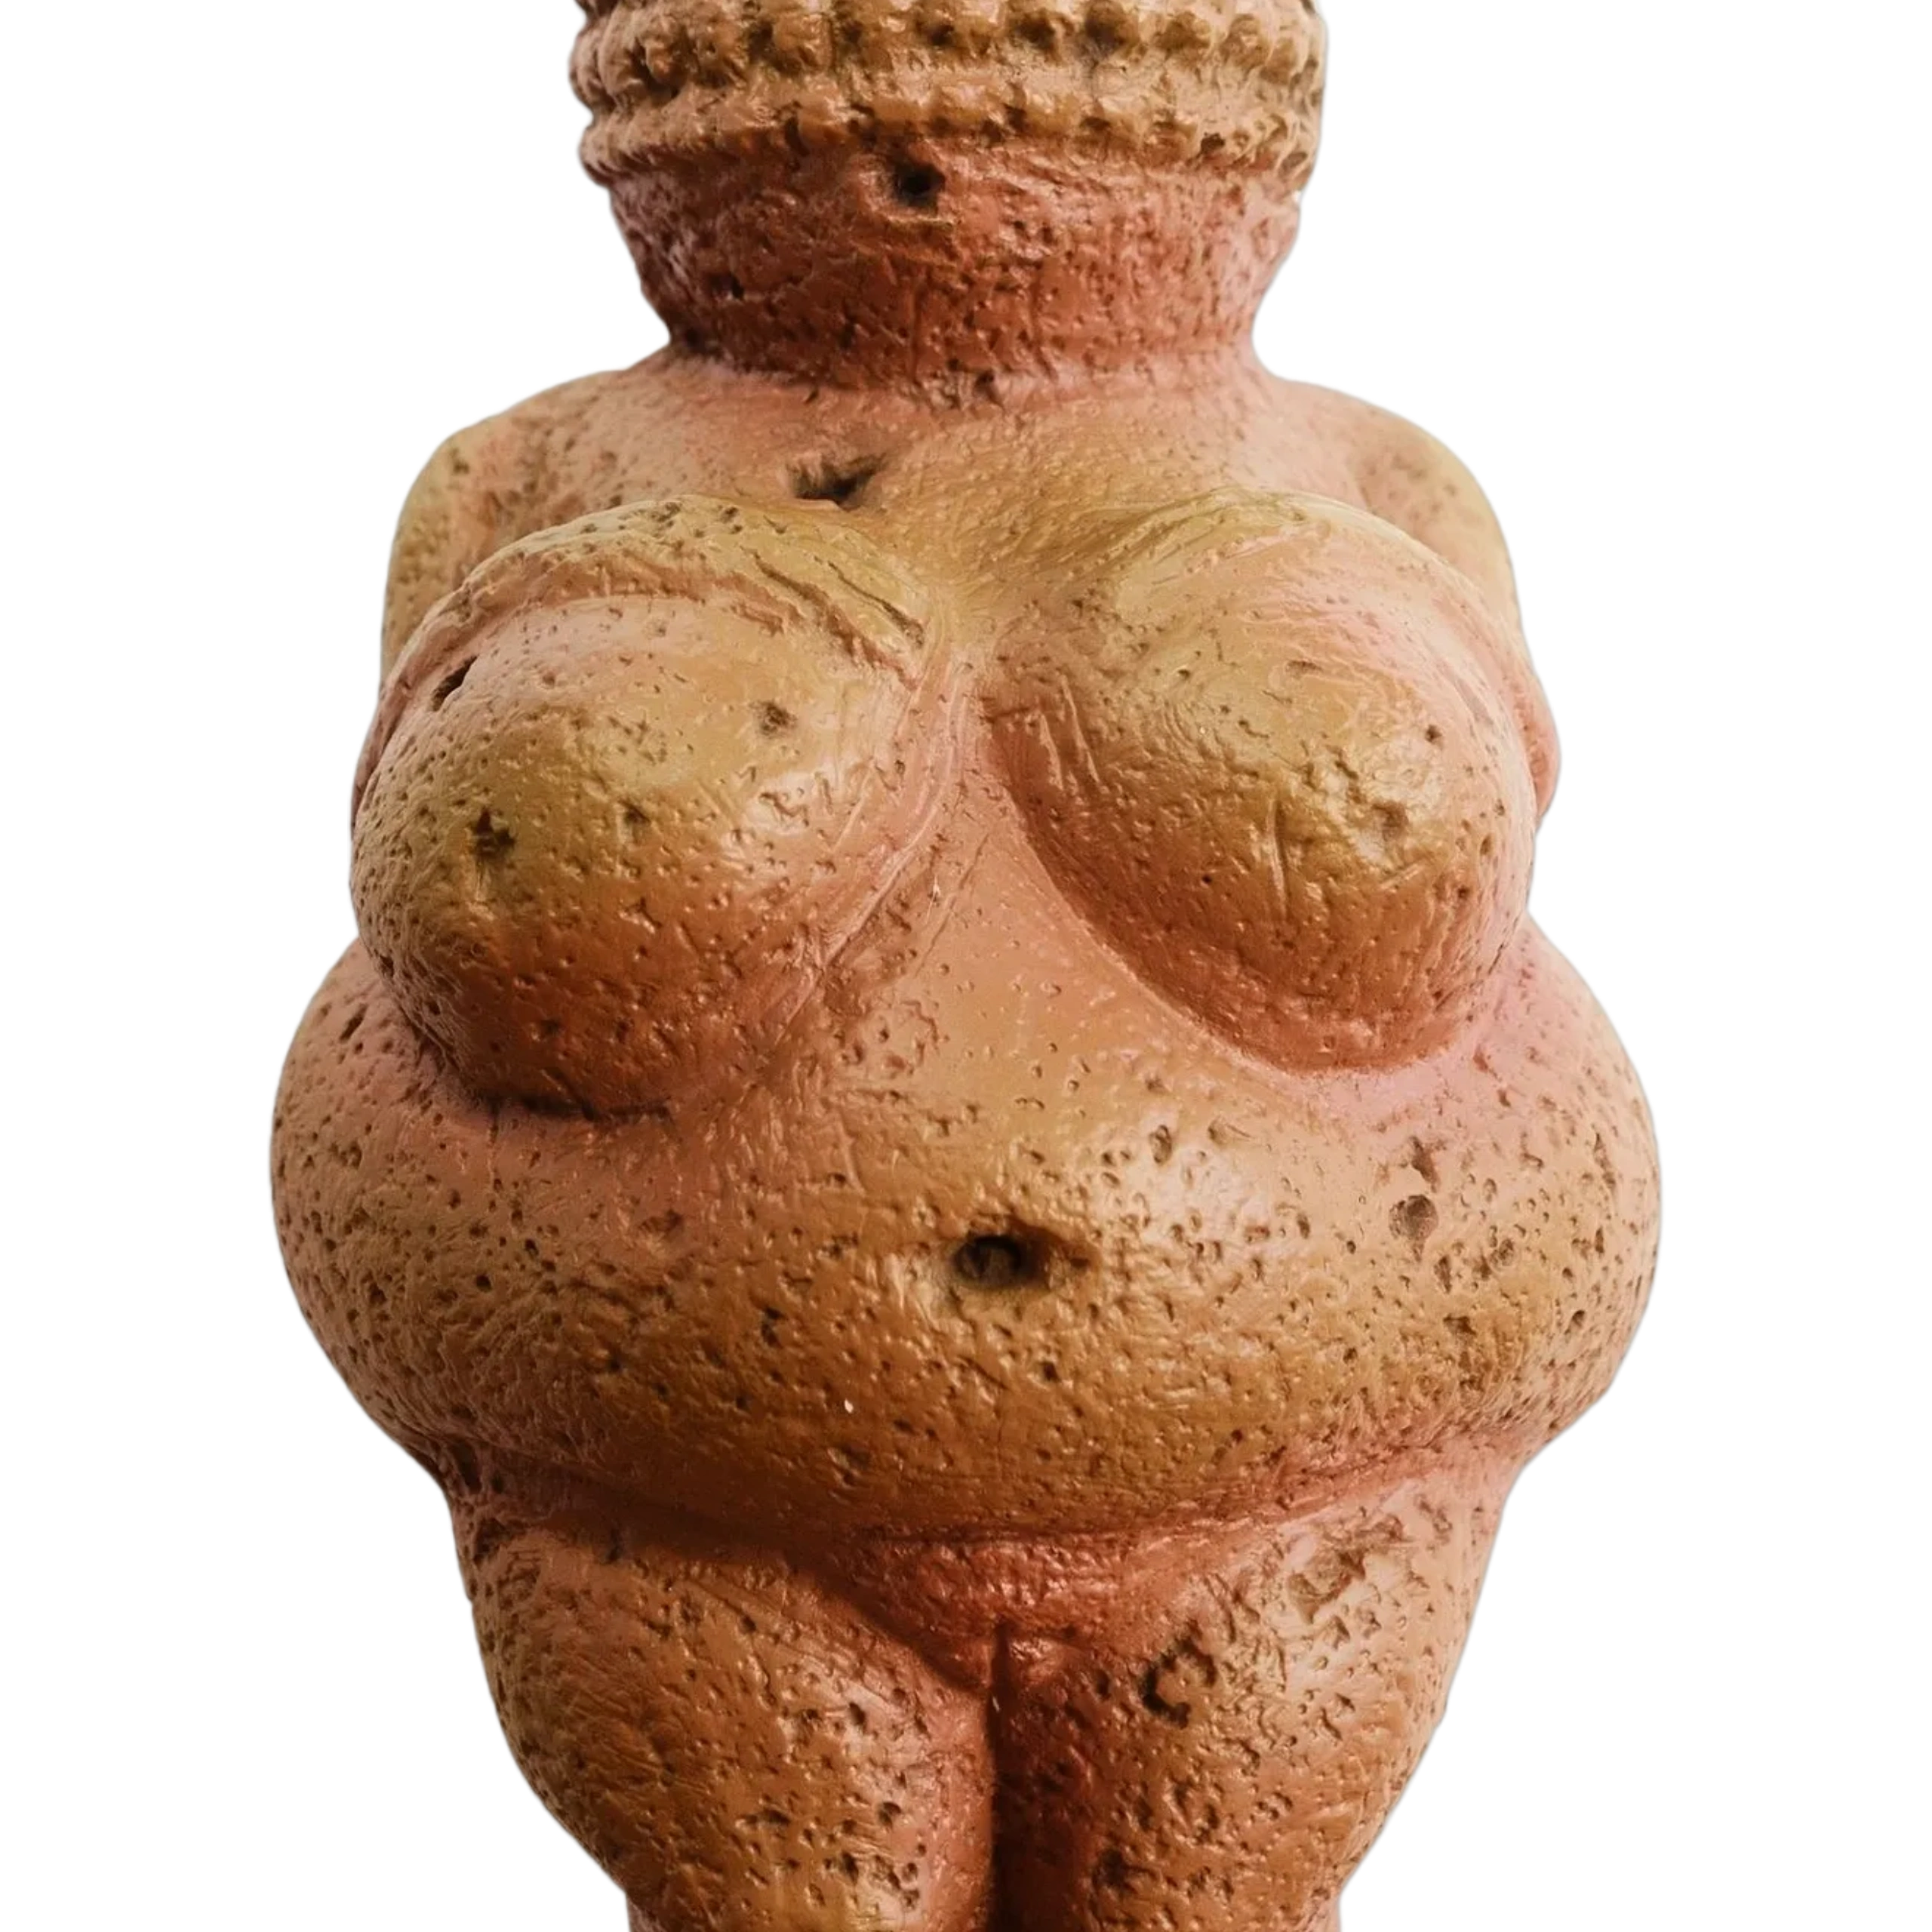 The Wallendorf Statue